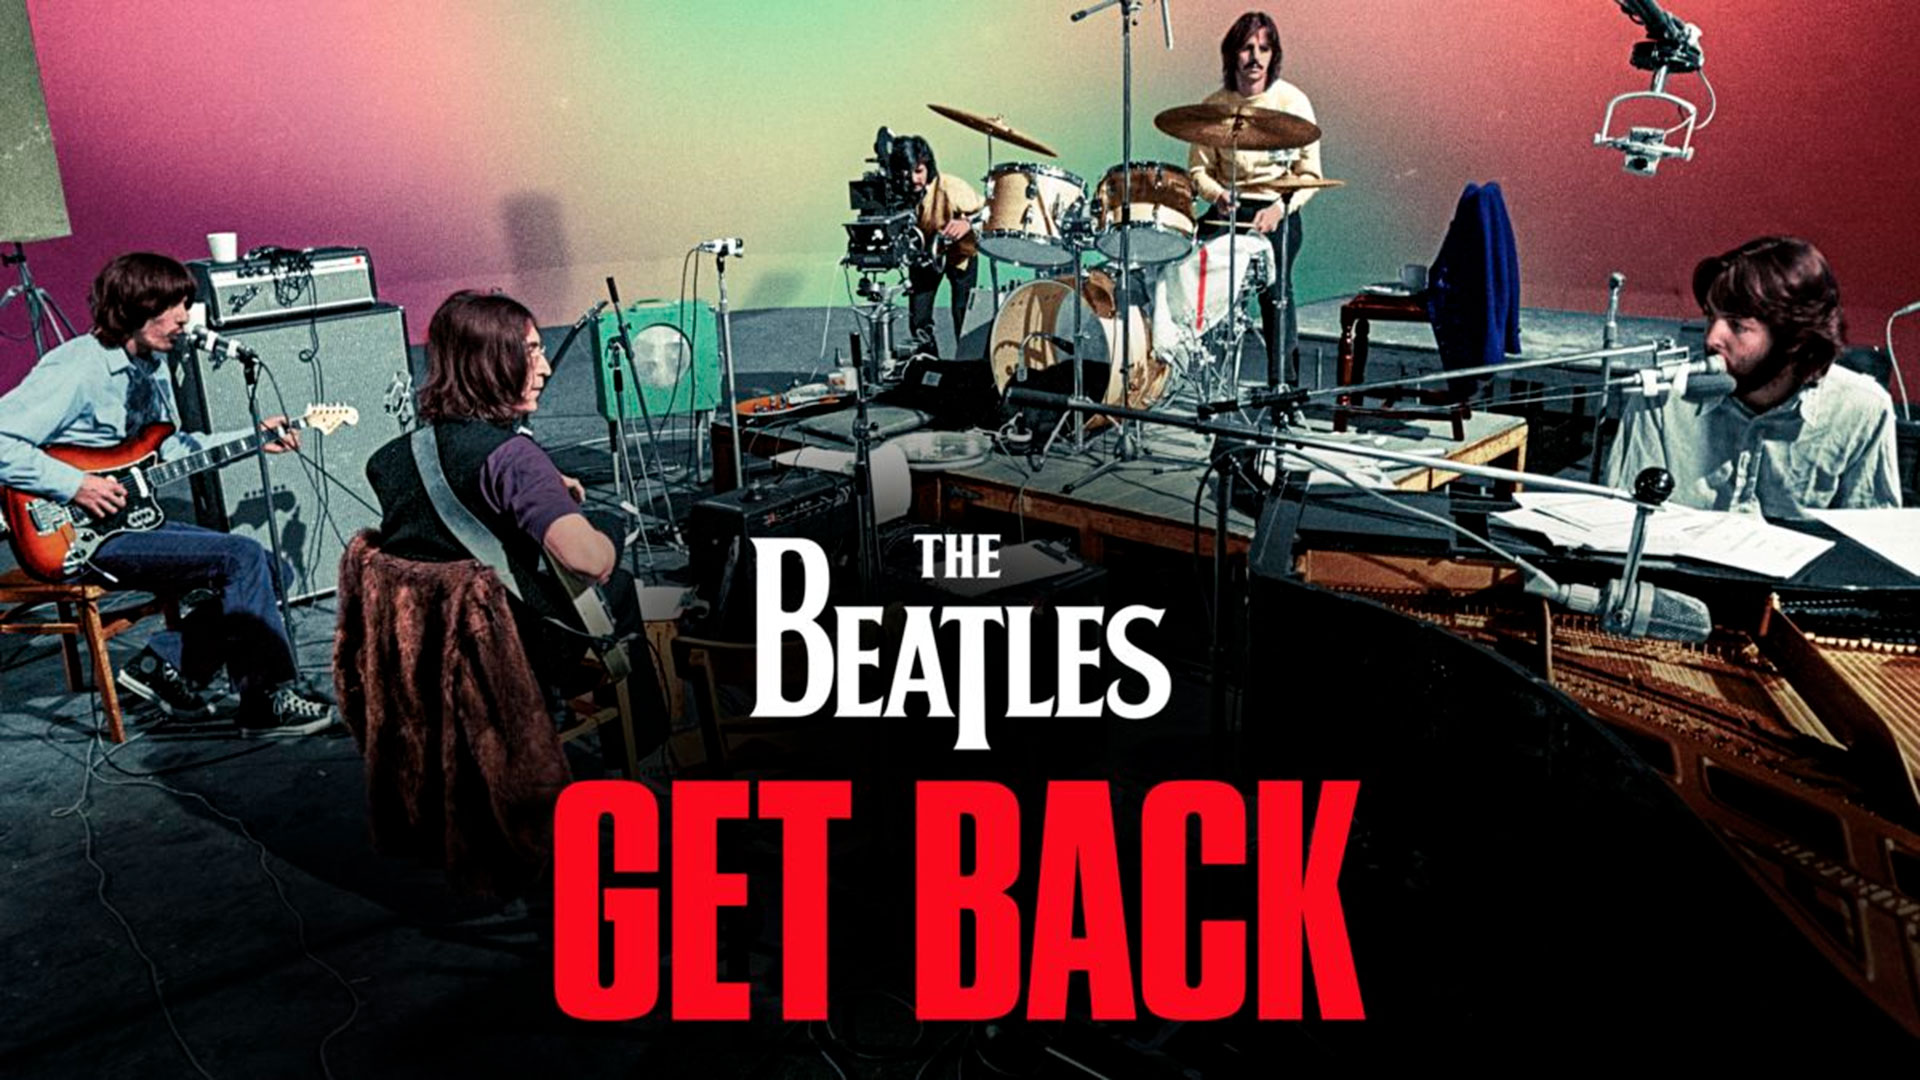 La serie documental de The Beatles está disponible en Disney+